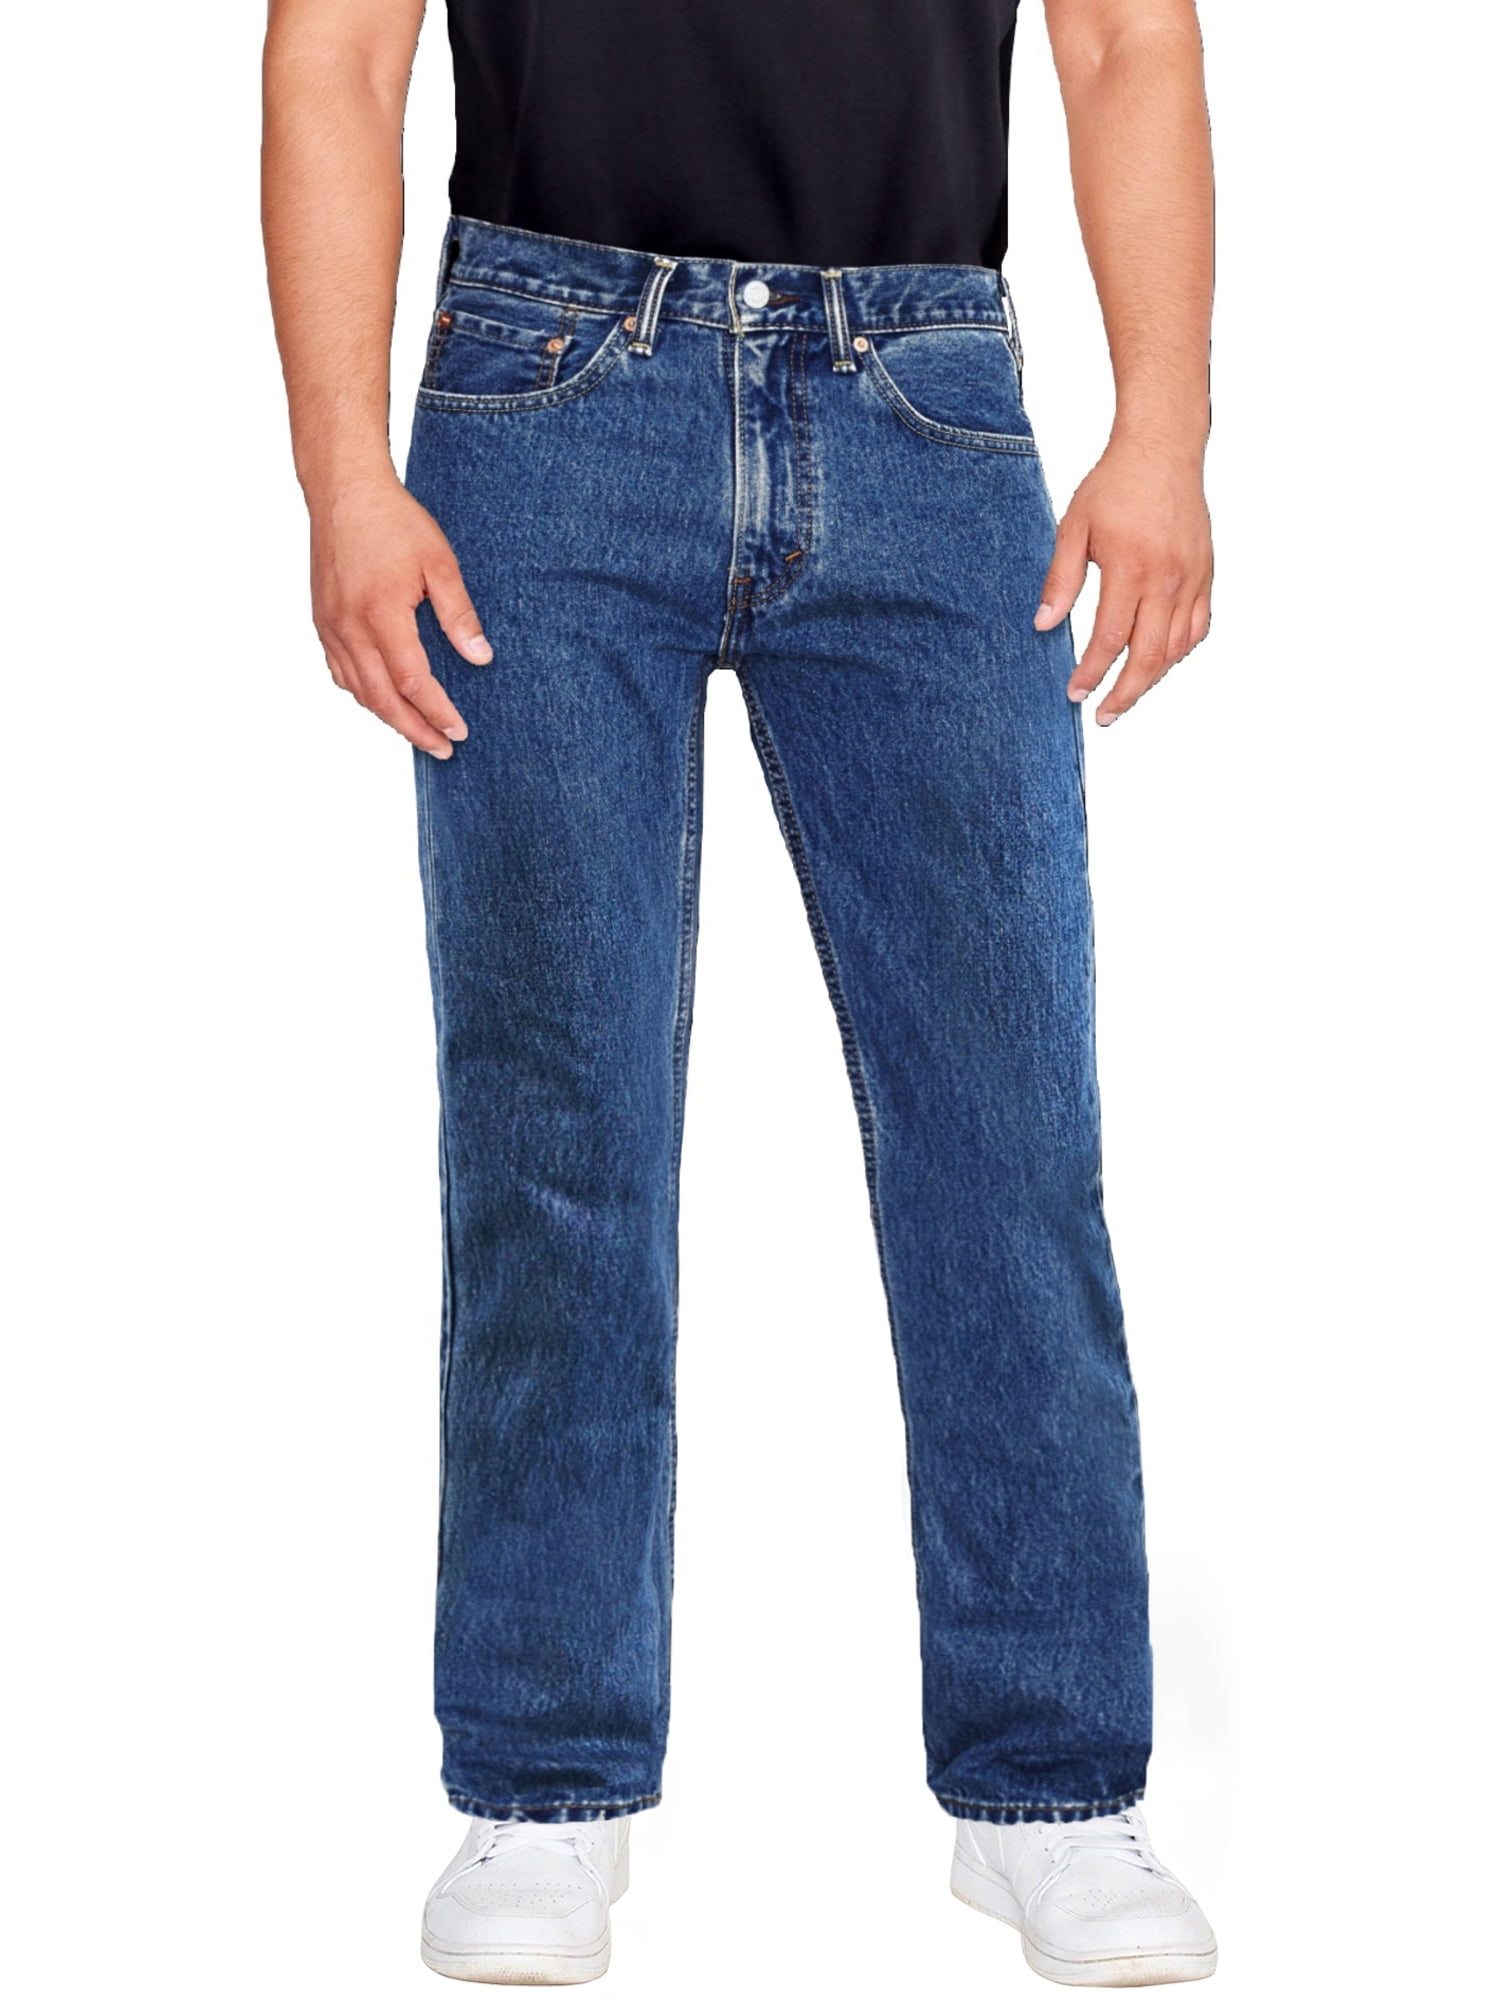 buy levis 505 jeans online